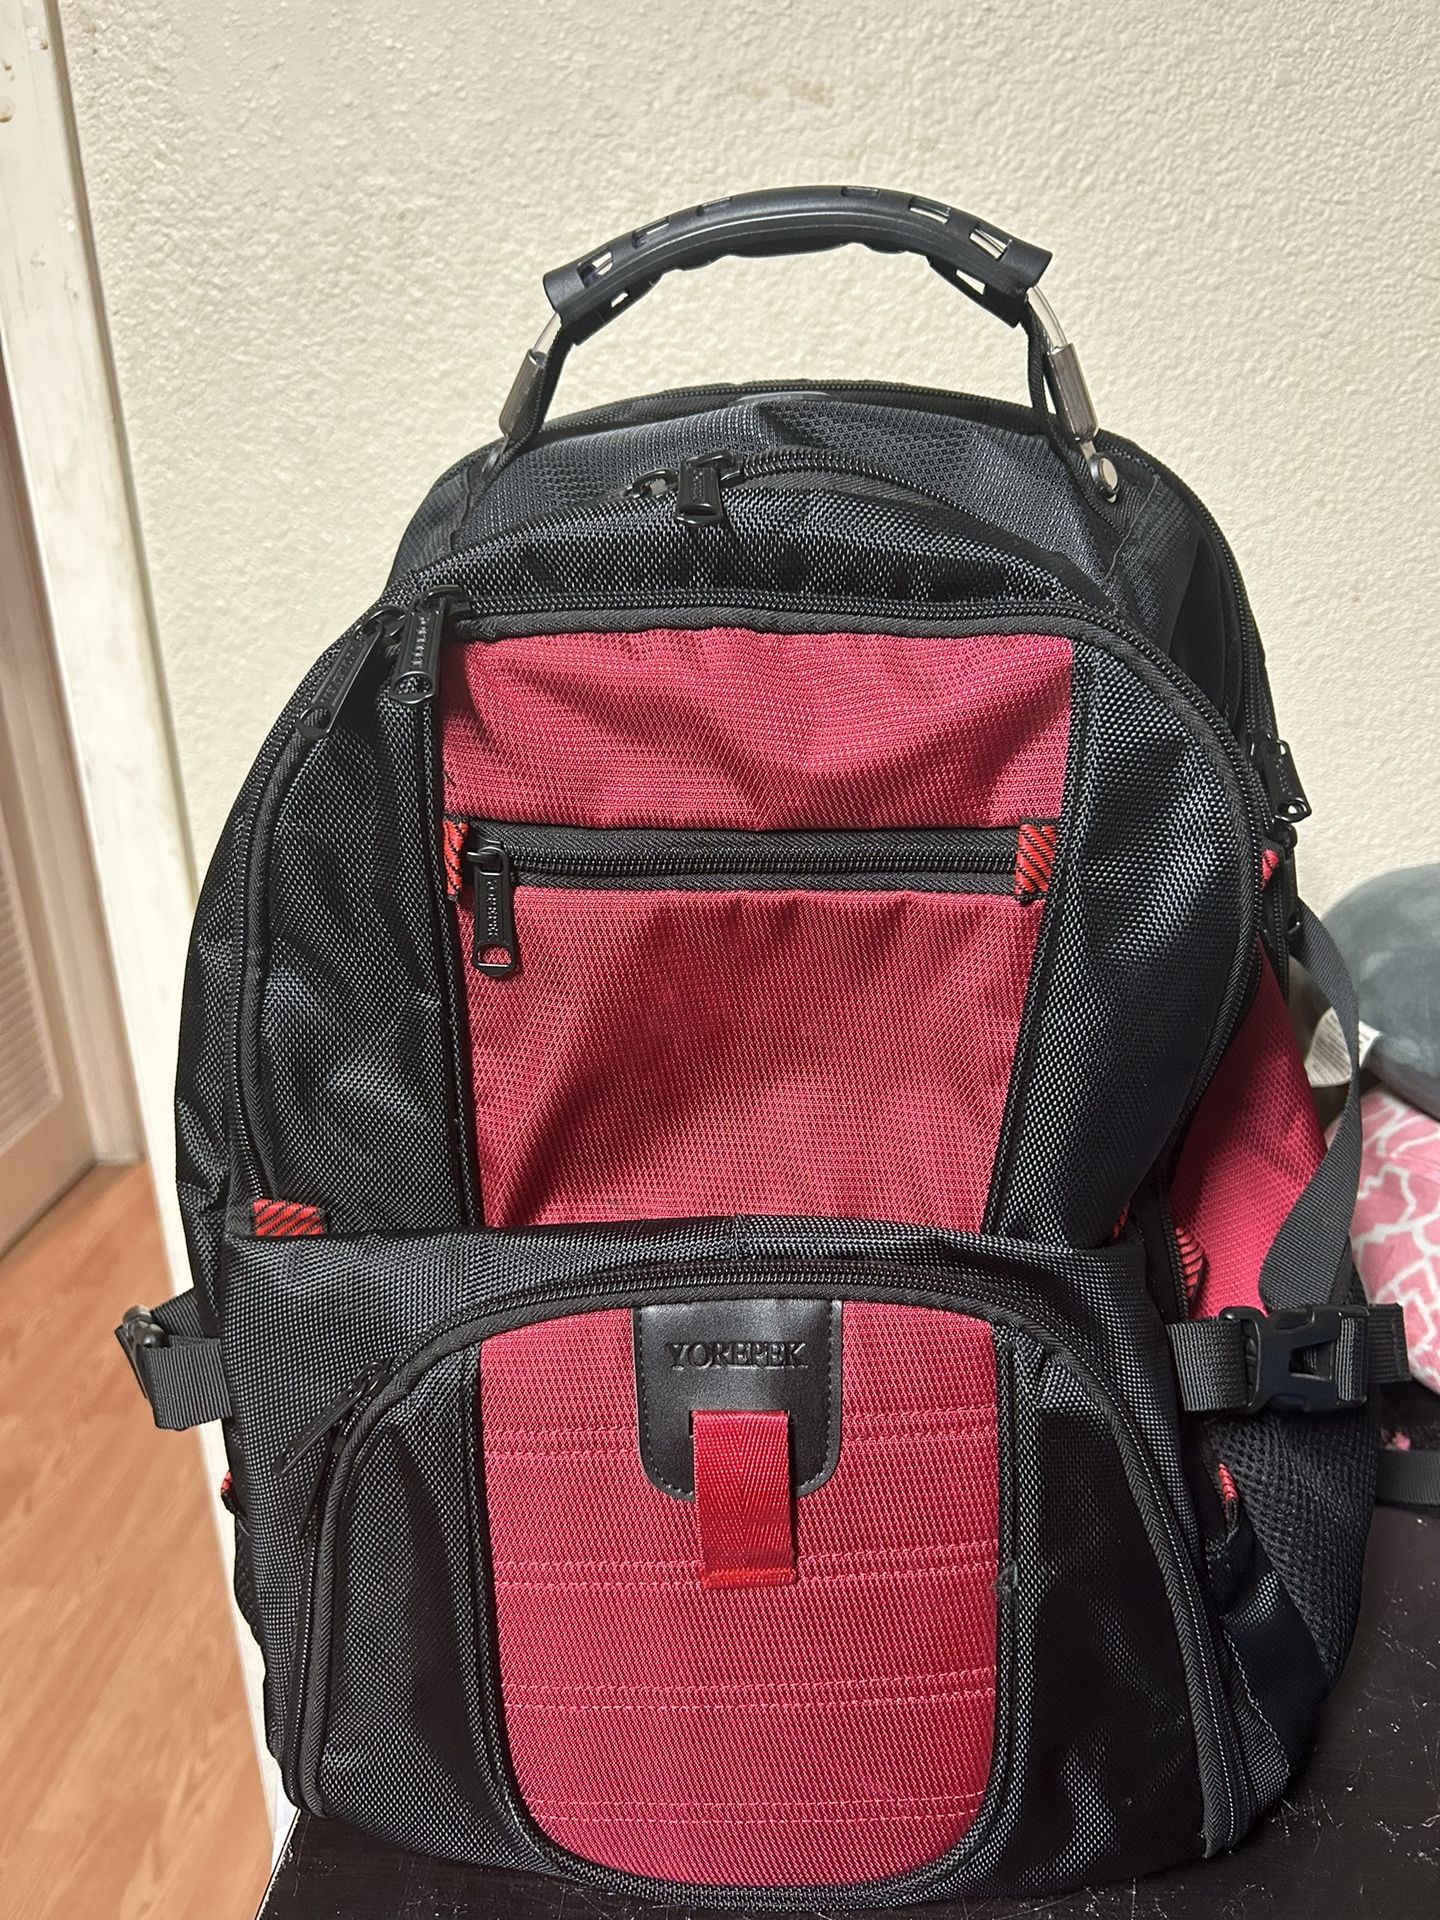 Yorepek Laptop Backpack